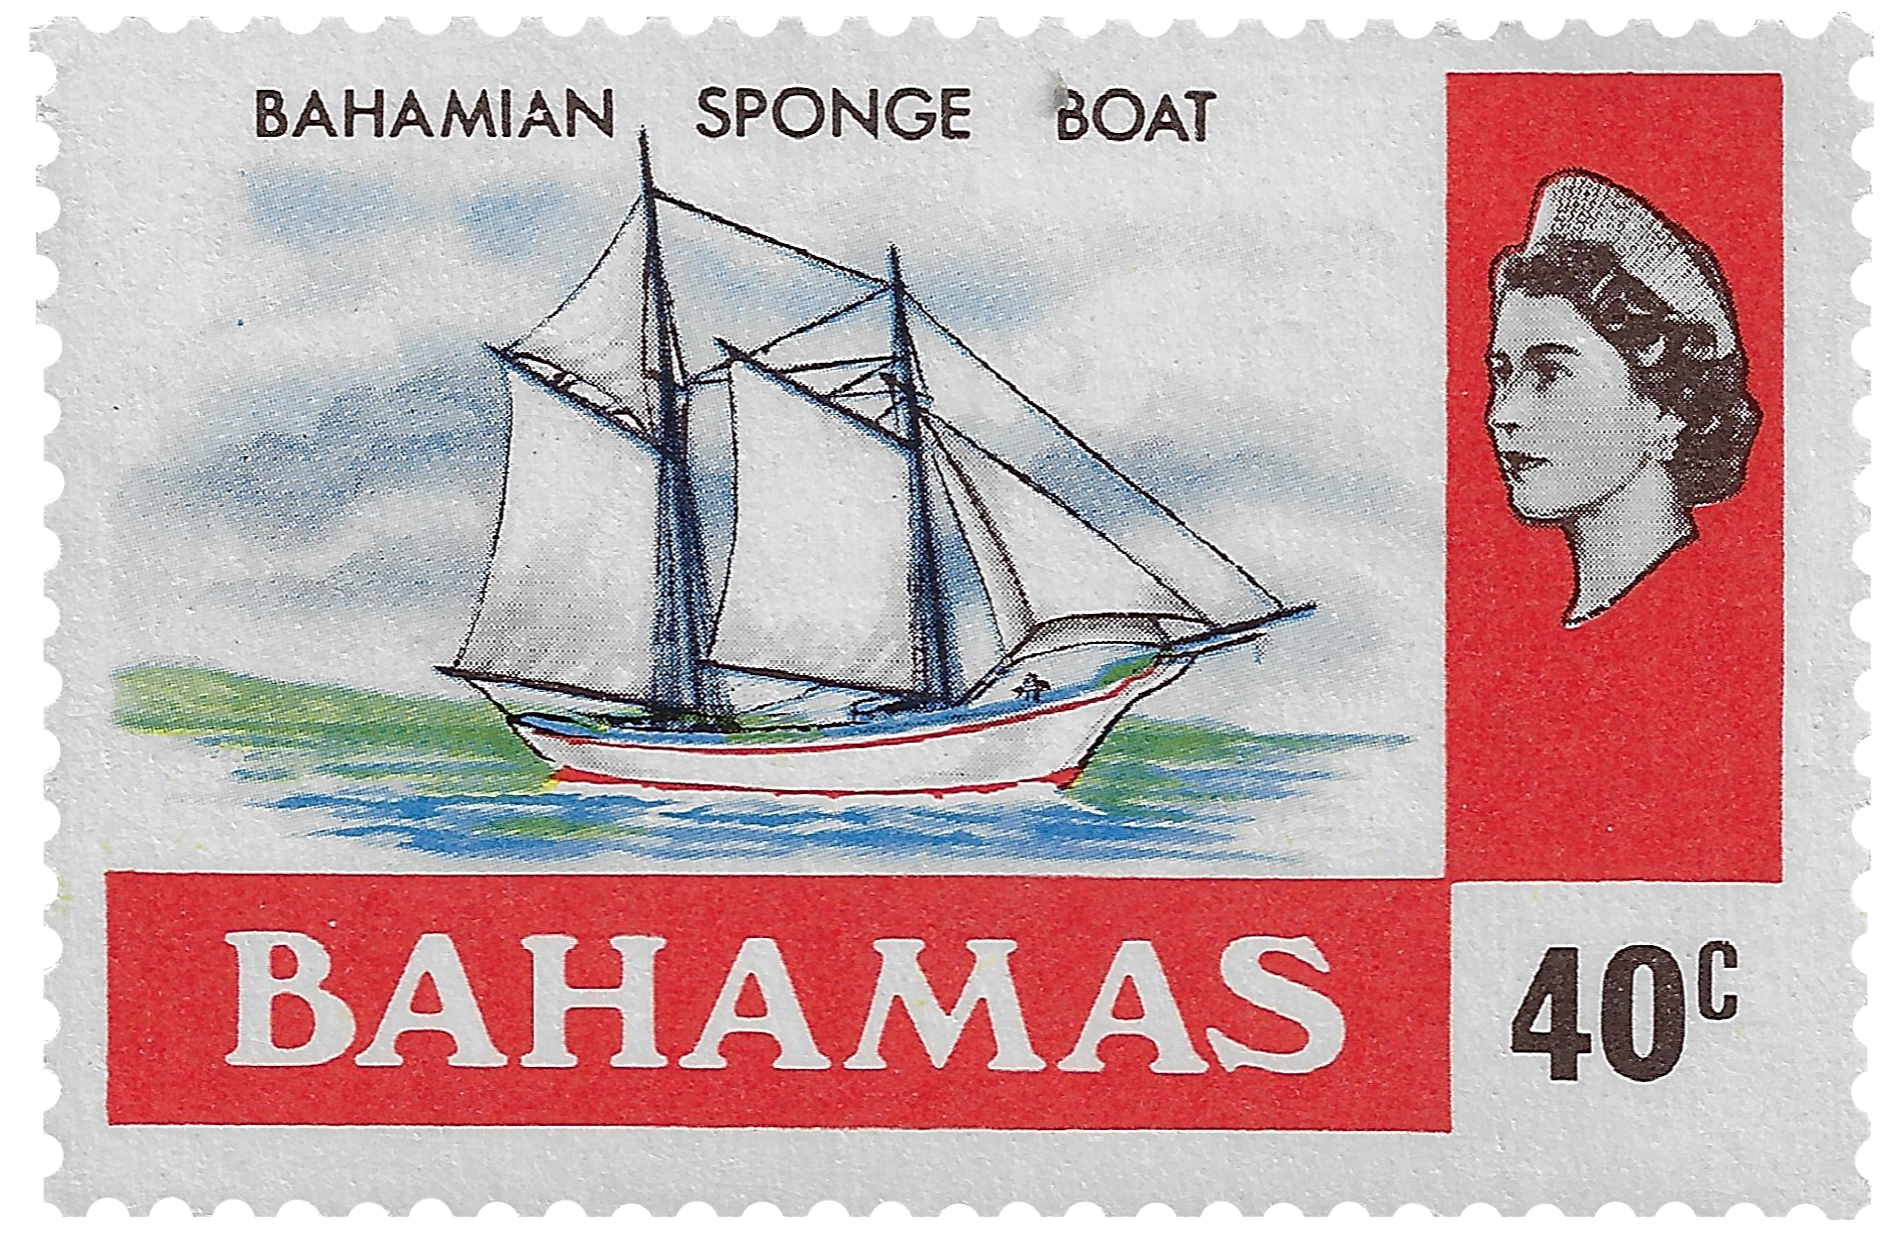 40c 1976, Bahamian Sponge Boat